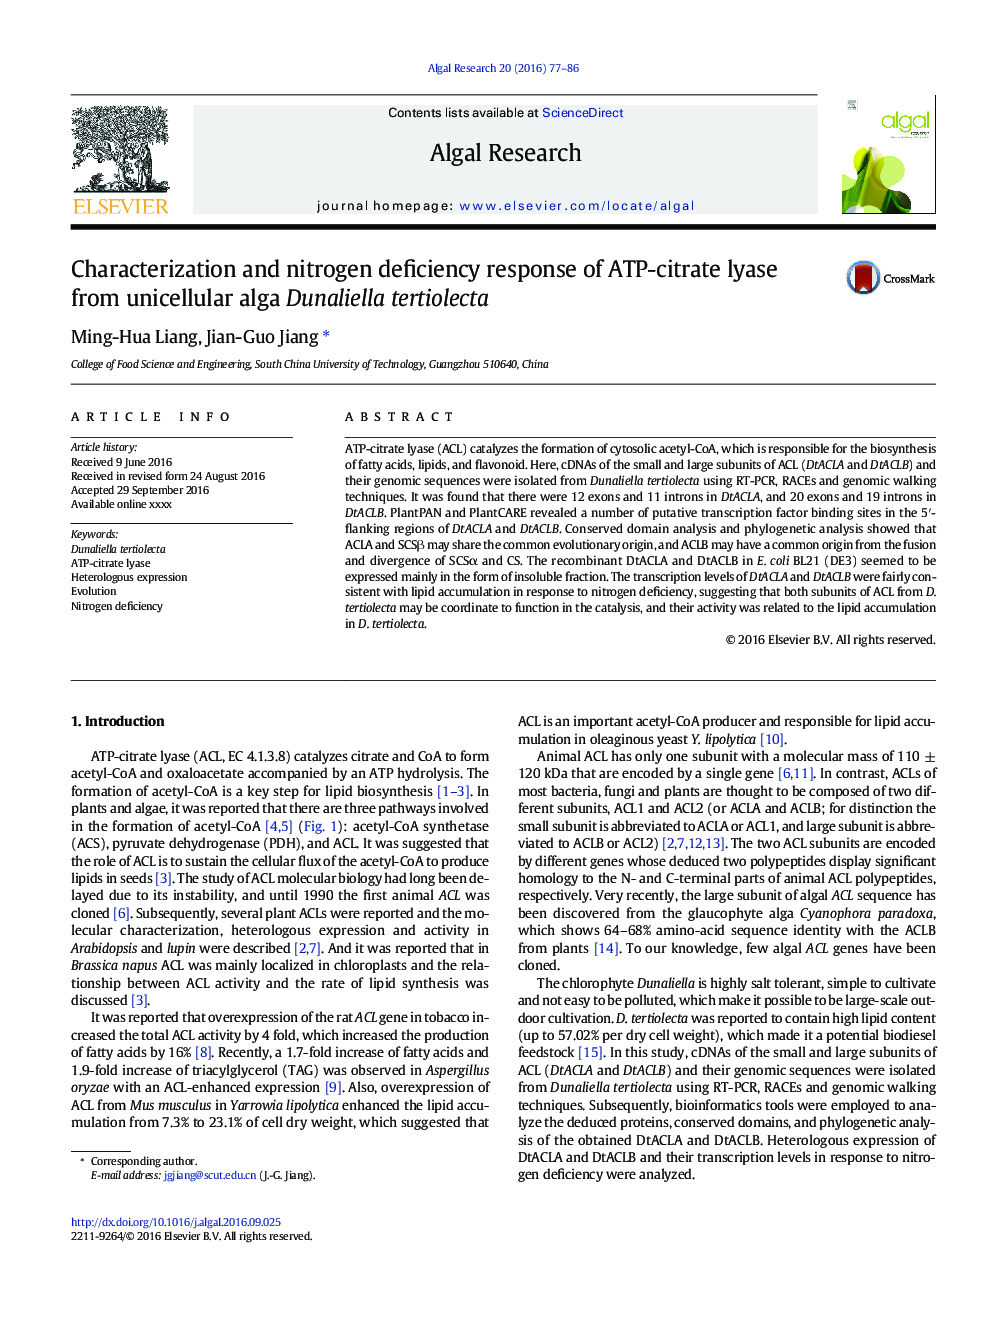 Characterization and nitrogen deficiency response of ATP-citrate lyase from unicellular alga Dunaliella tertiolecta